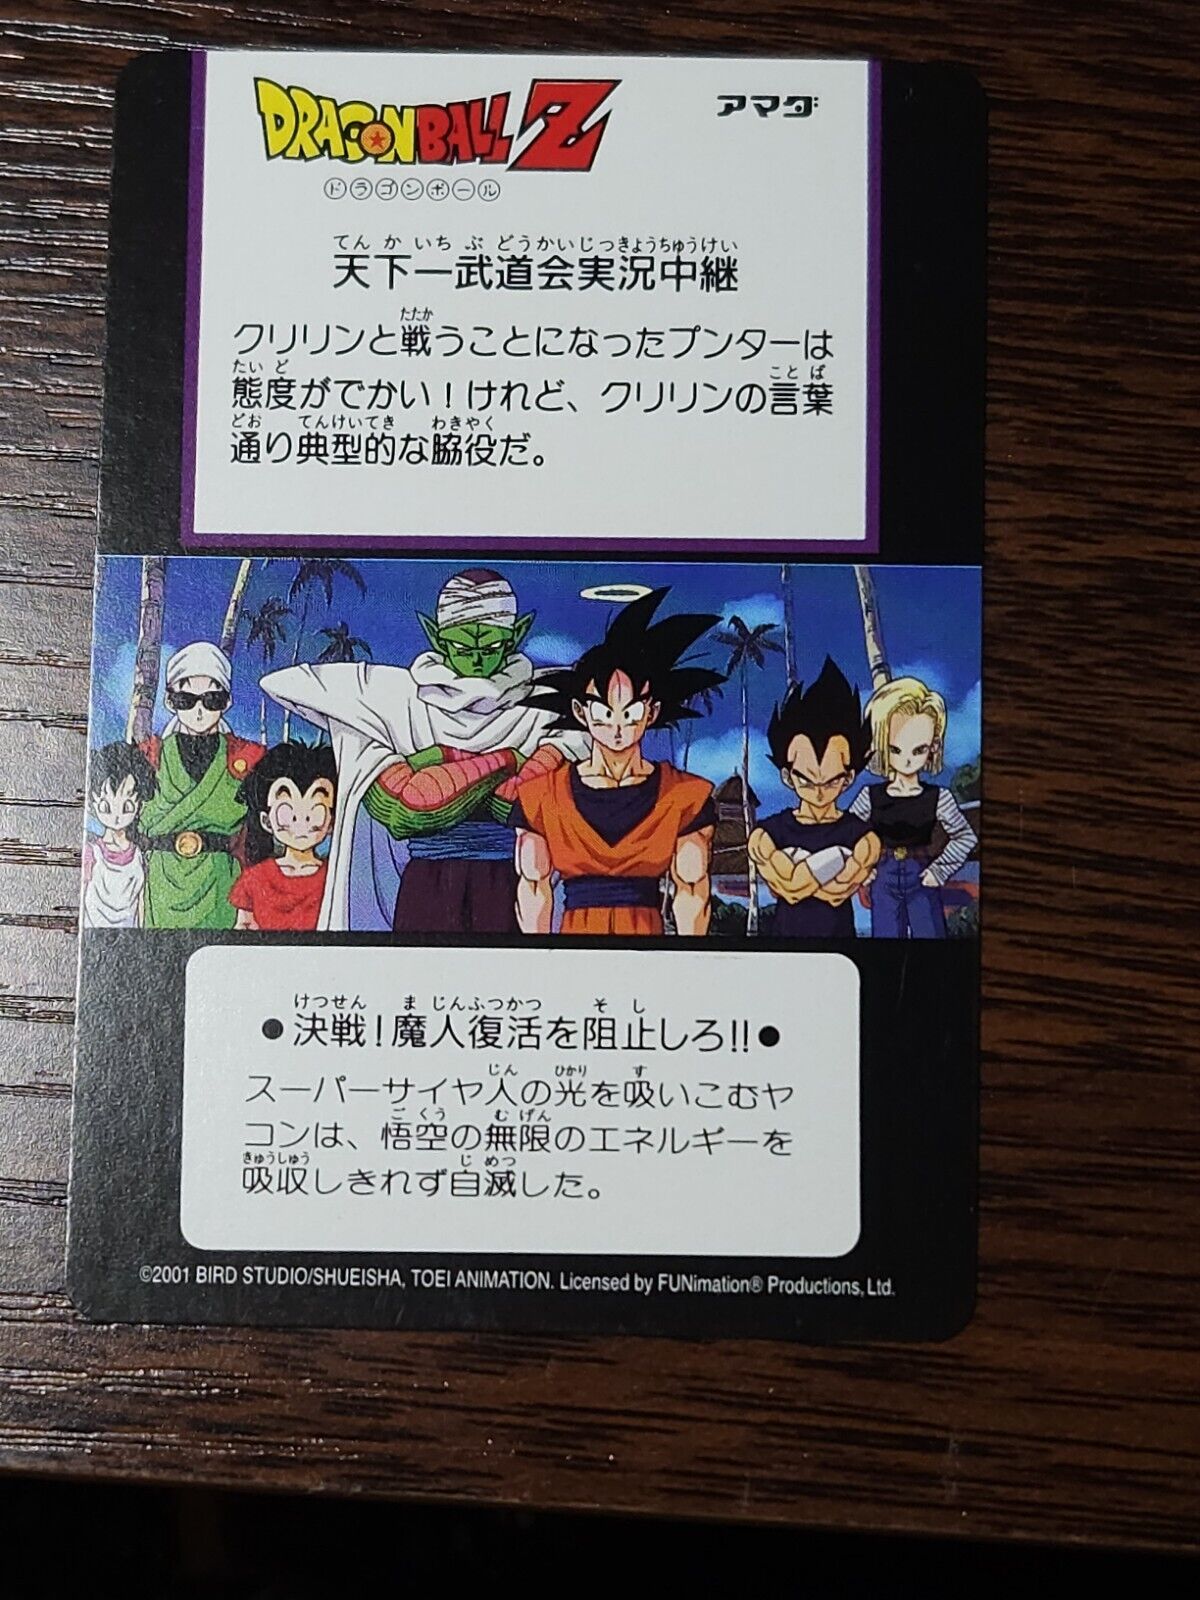 Dragon Ball Z Hero Collection Card #209 Errors & Oddities